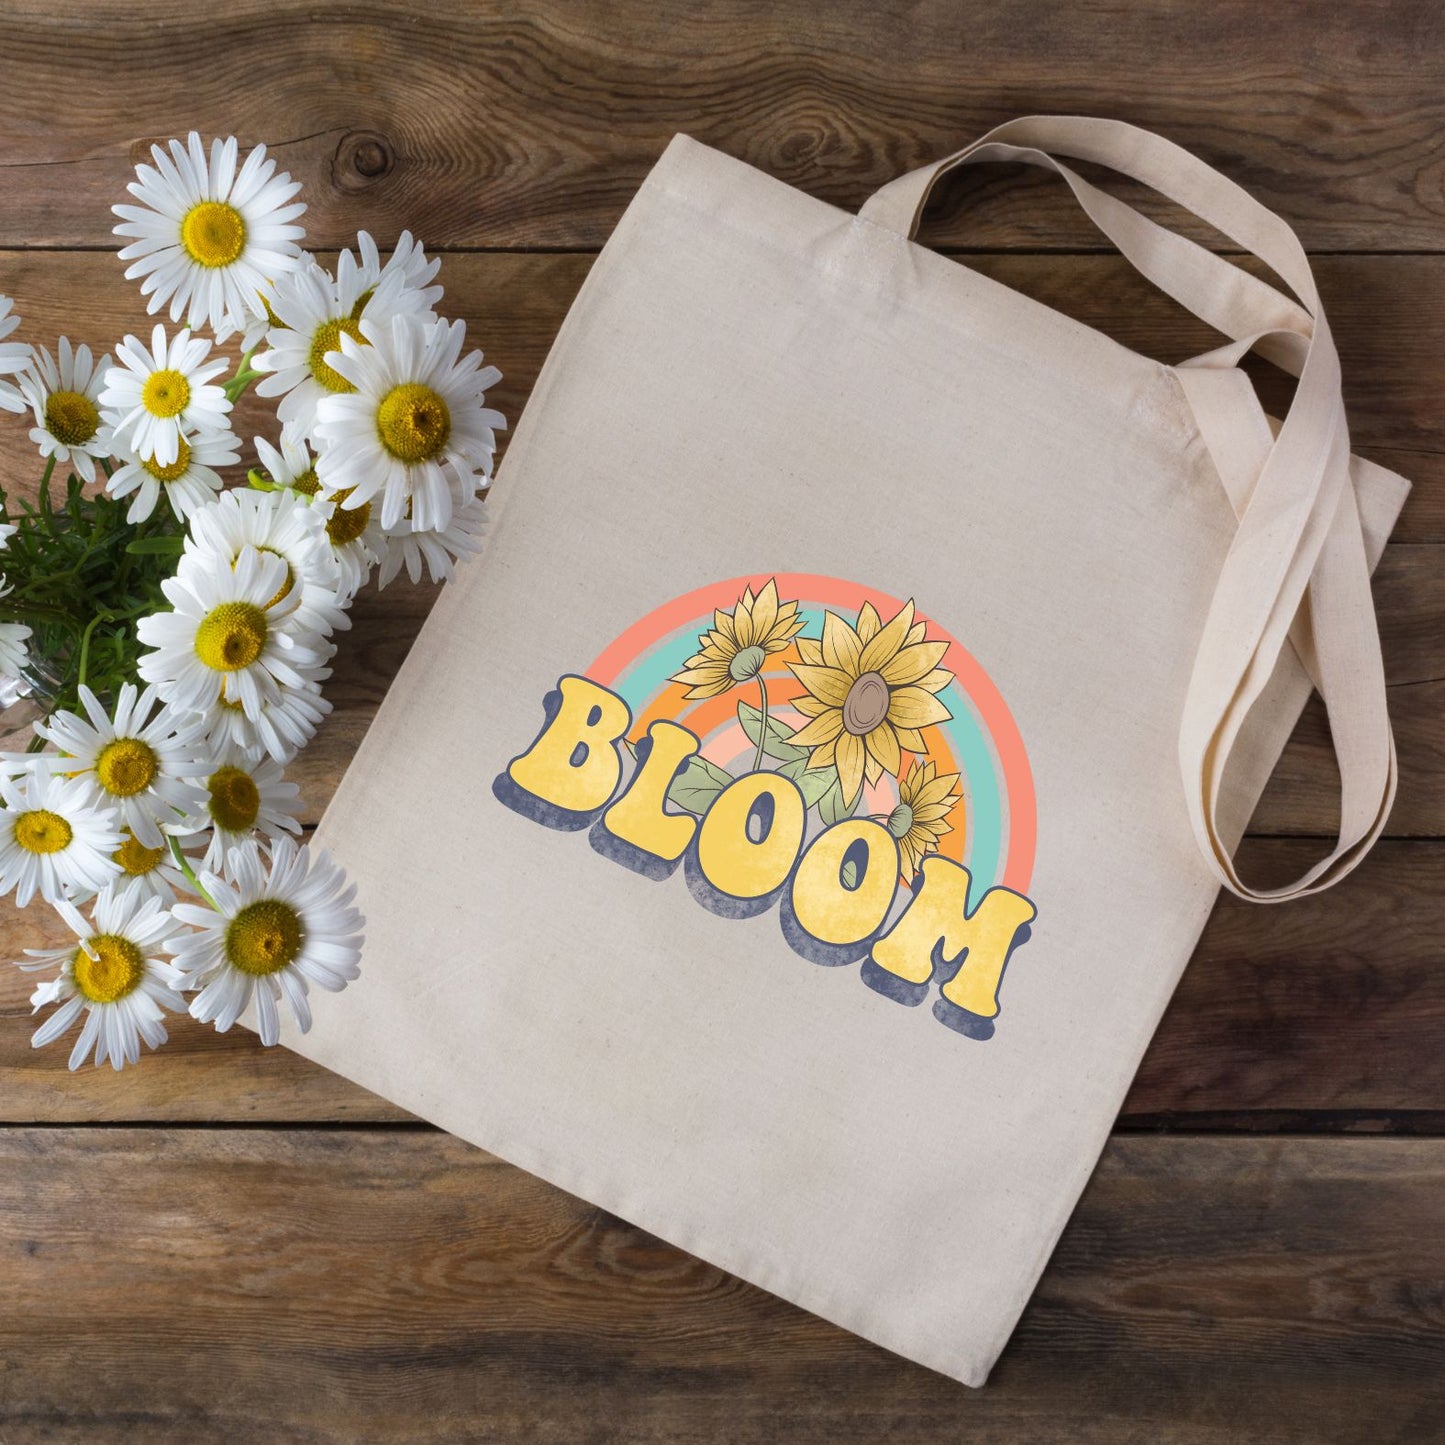 Shopping bag aesthetic 100% cotone naturale | Mod. Bloom